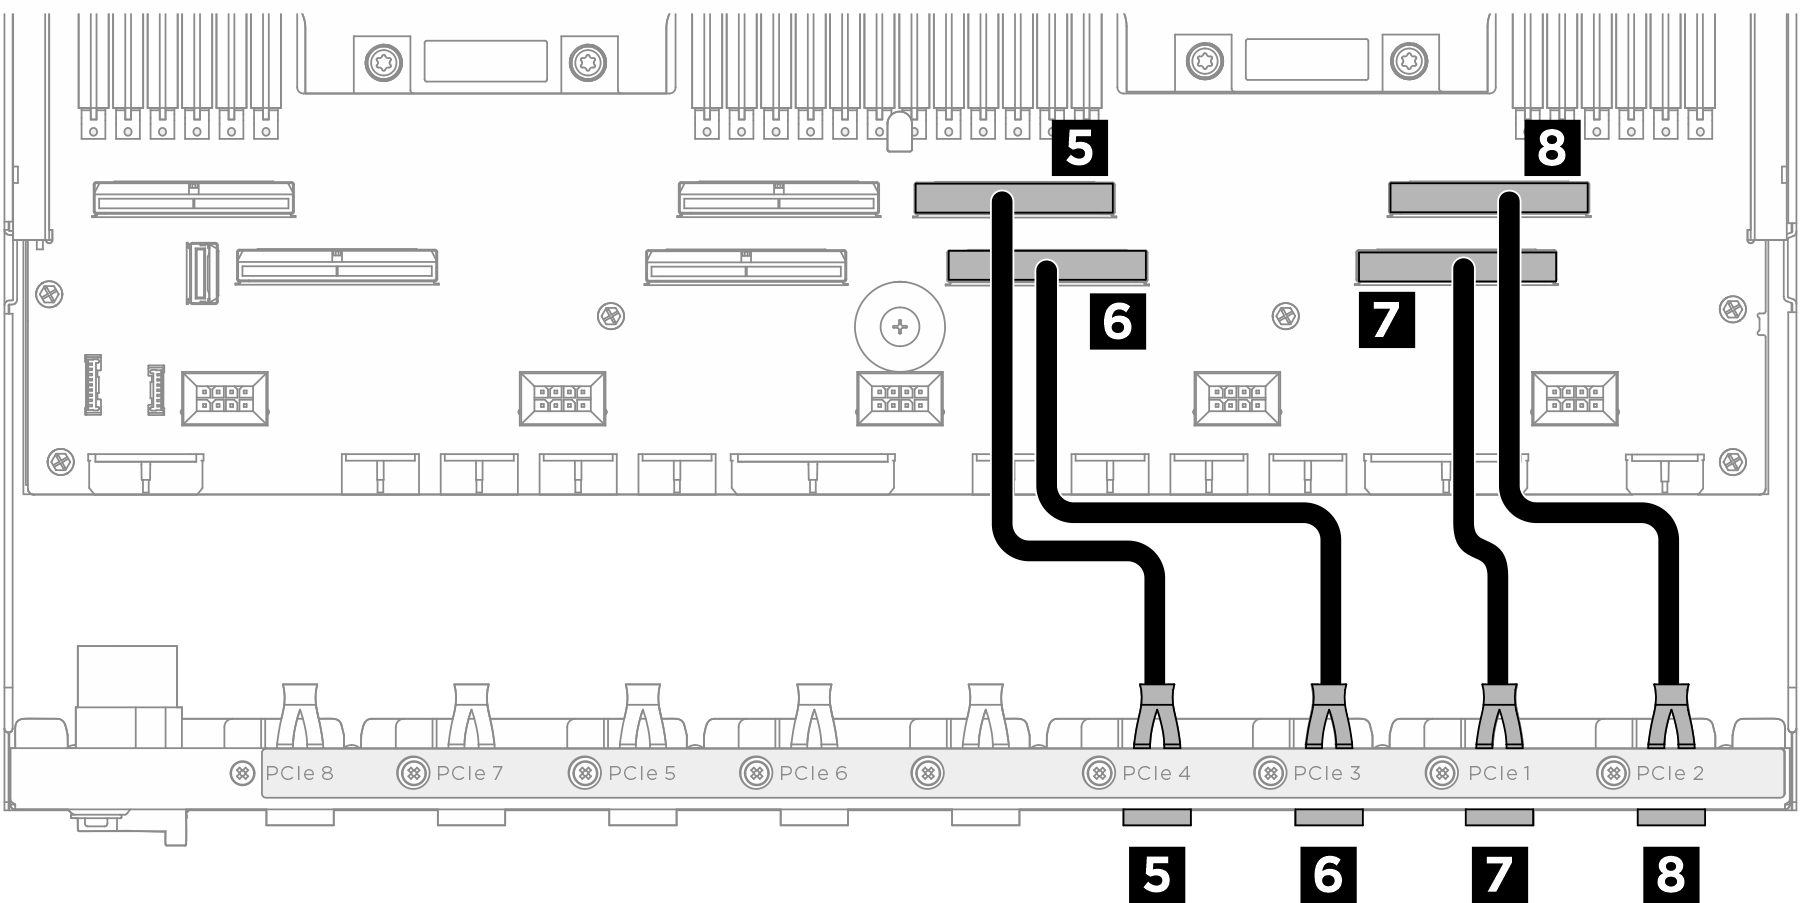 Placa de comutador PCIe cable routing (signal cables)